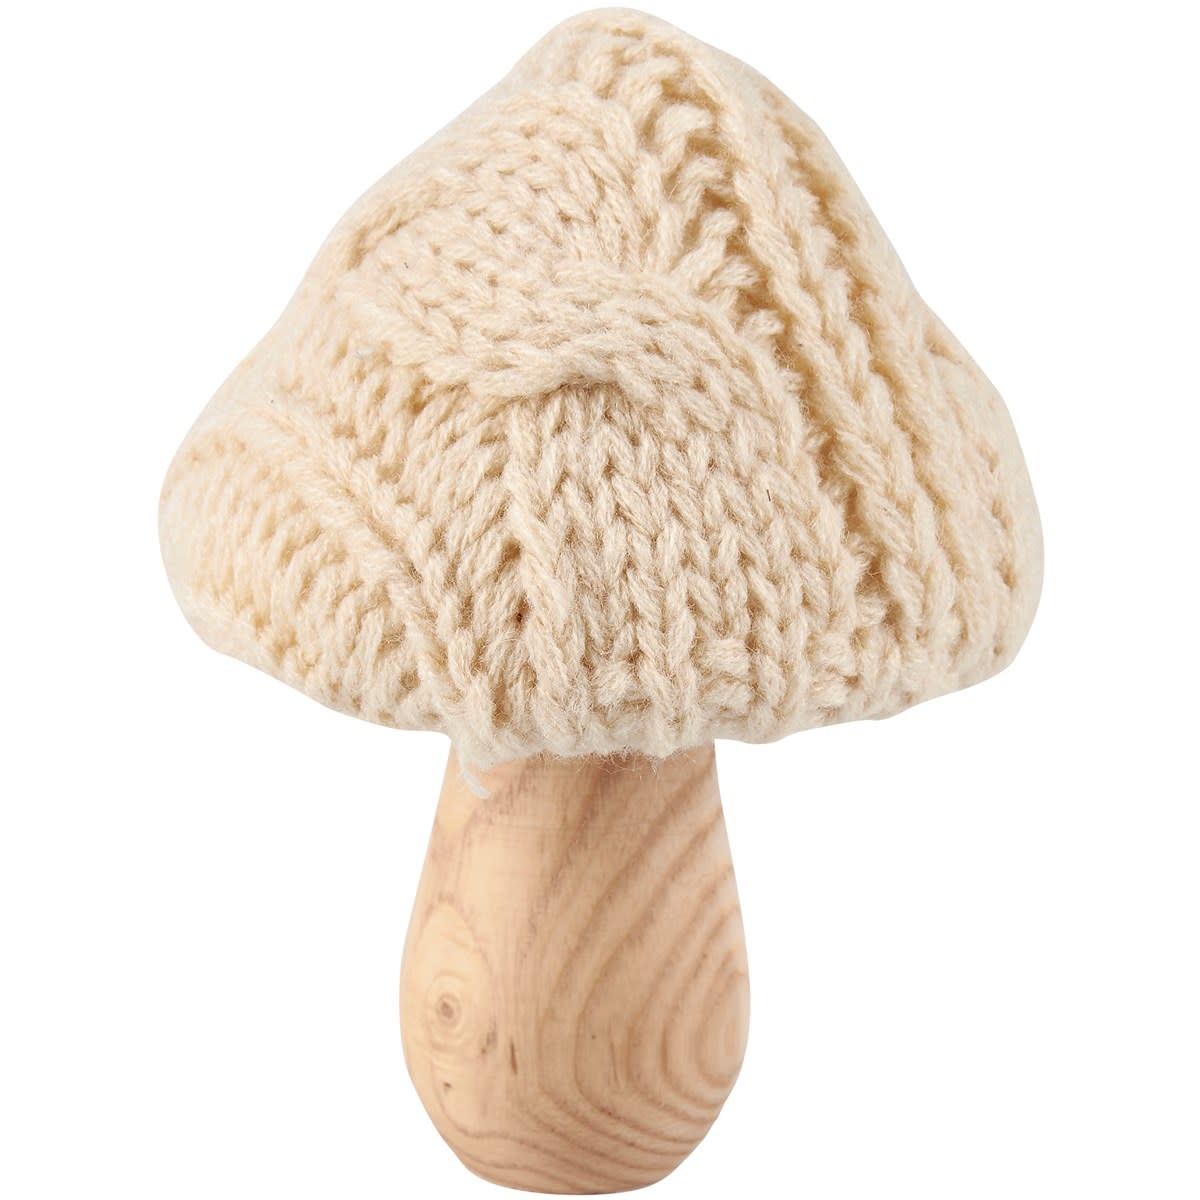 FLEURISH Knitted Mushroom